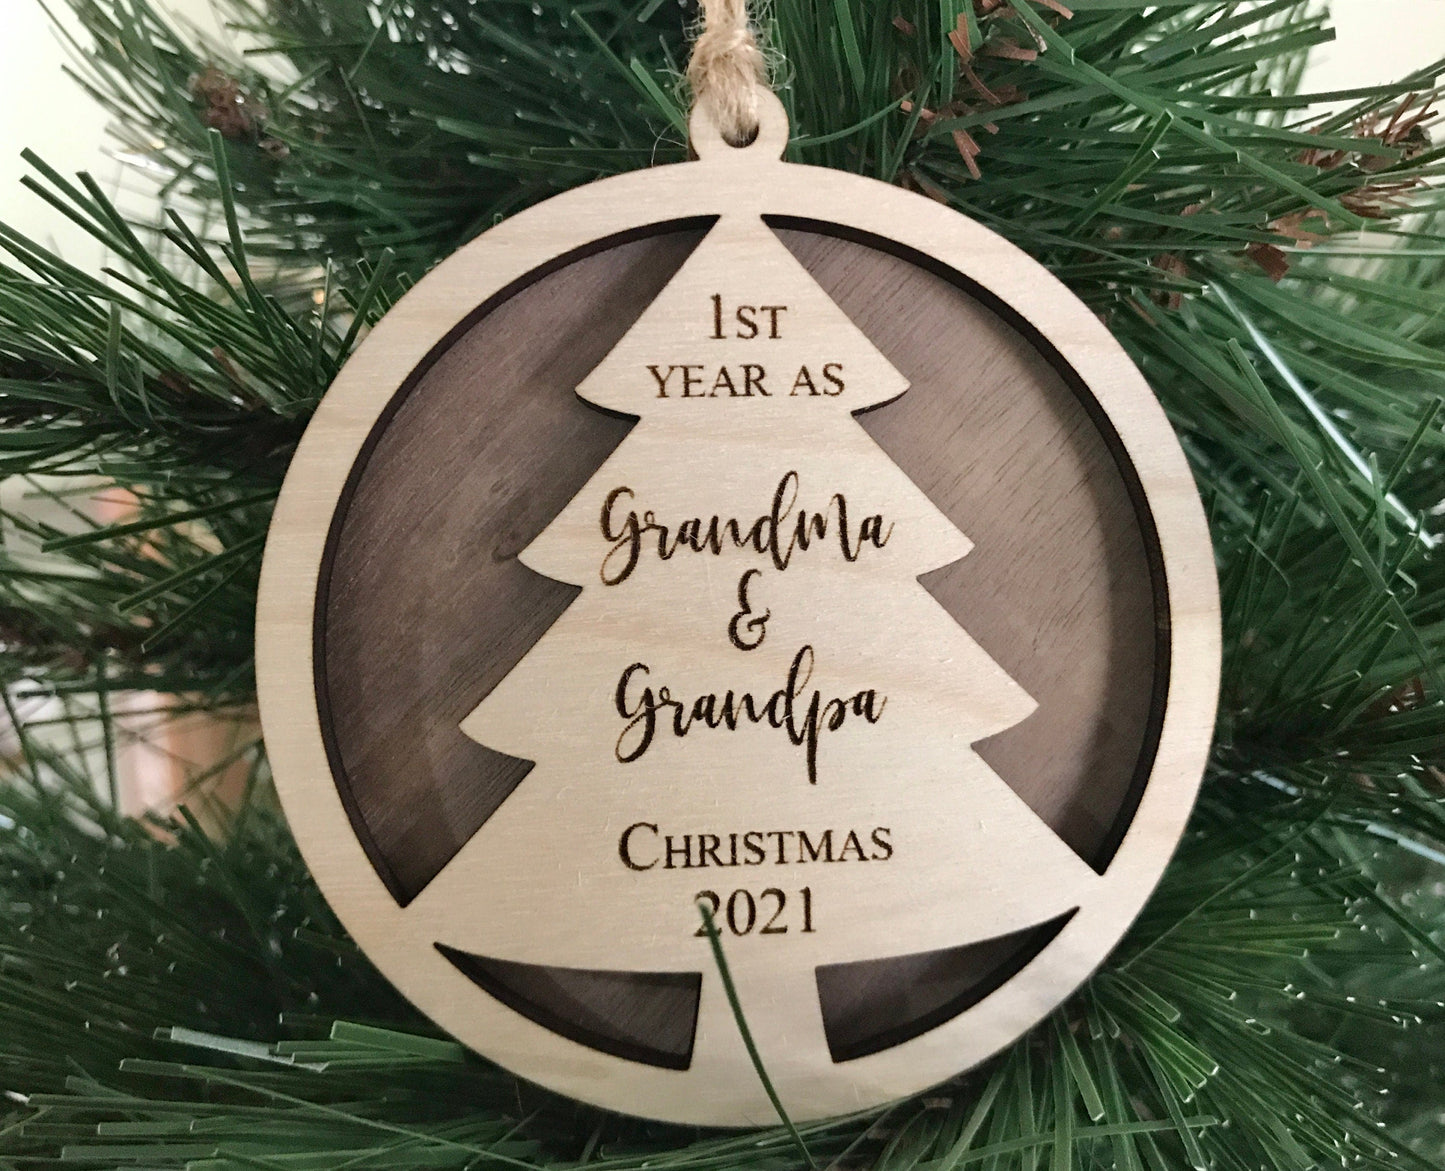 Christmas gift ideas for grandparents - grandparents christmas ornament 